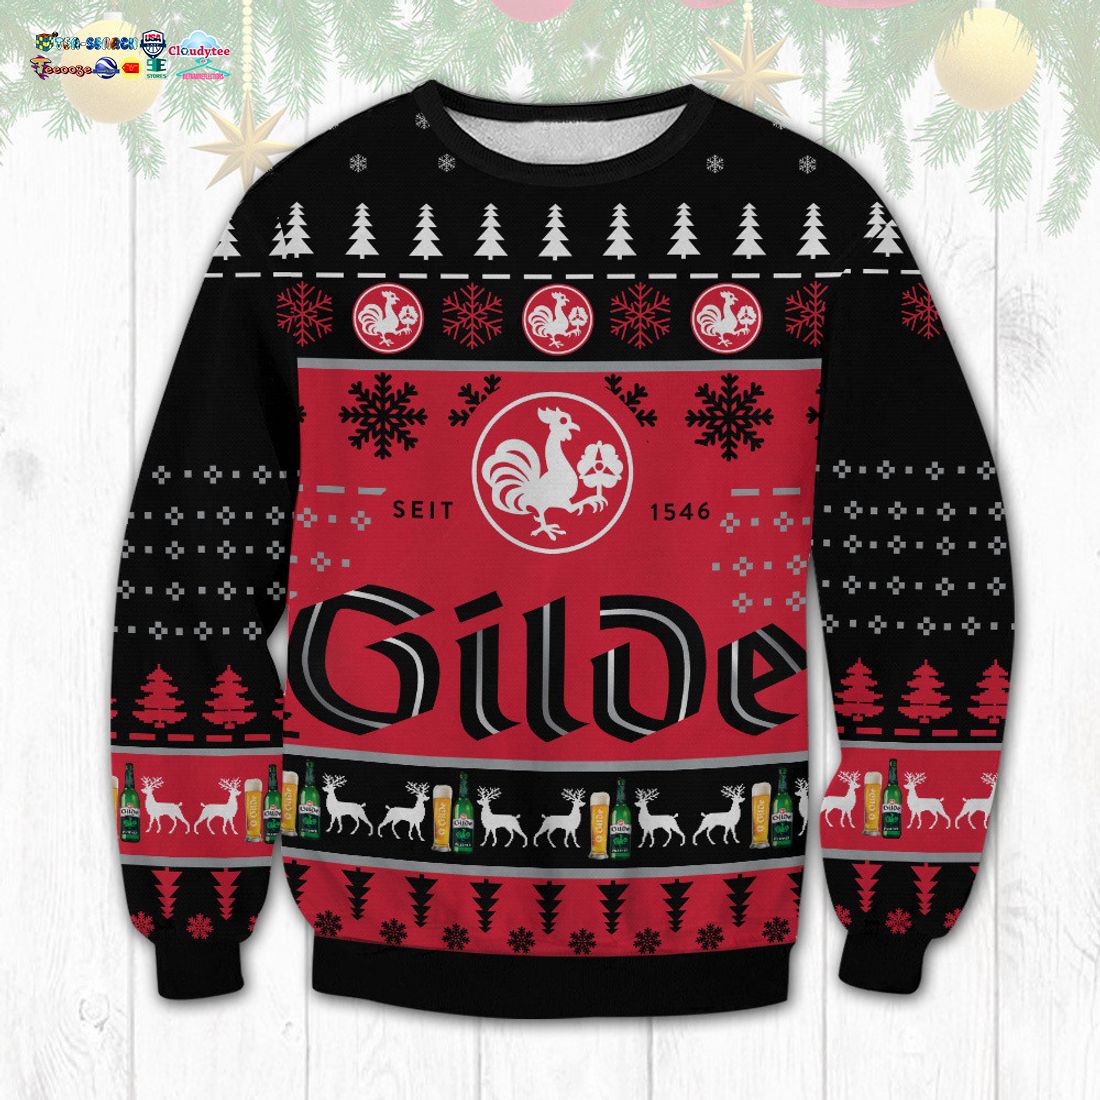 Gilde Ugly Christmas Sweater - Stunning